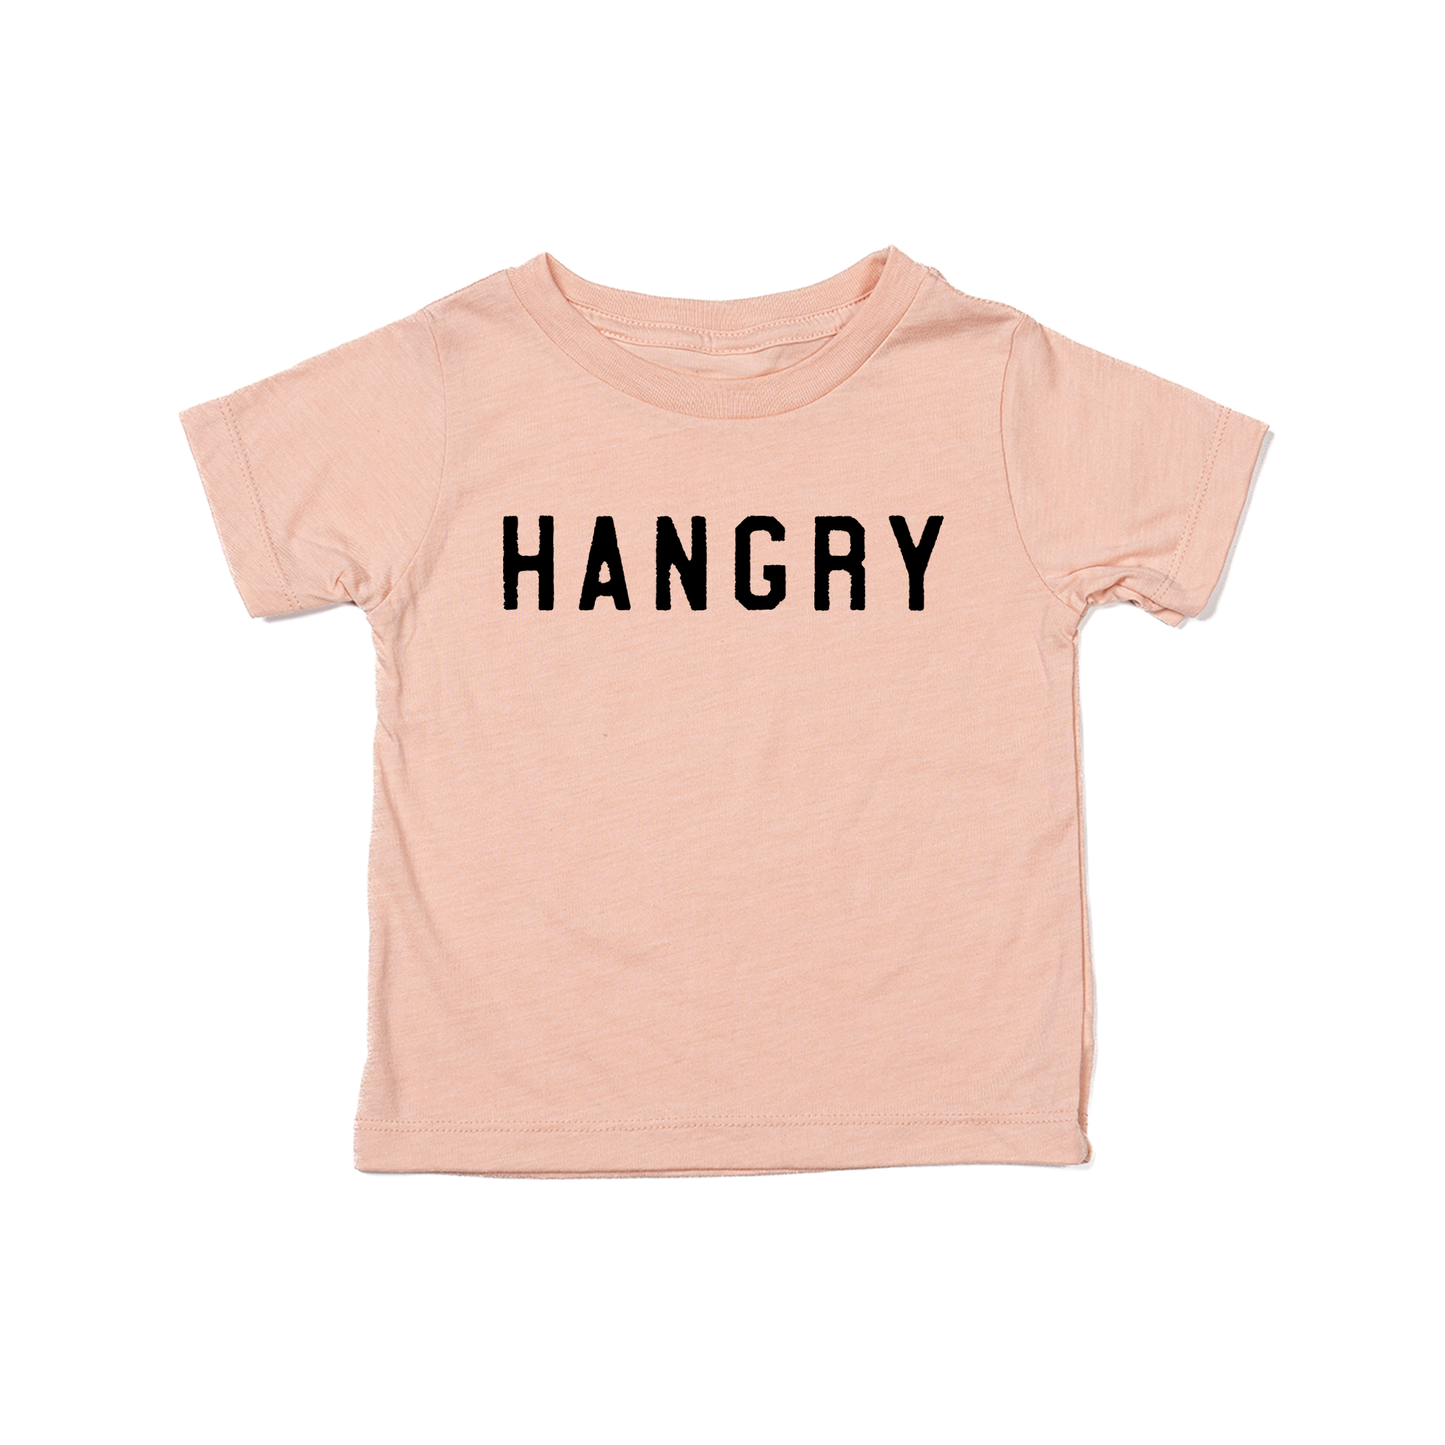 Hangry - Kids Tee (Peach)